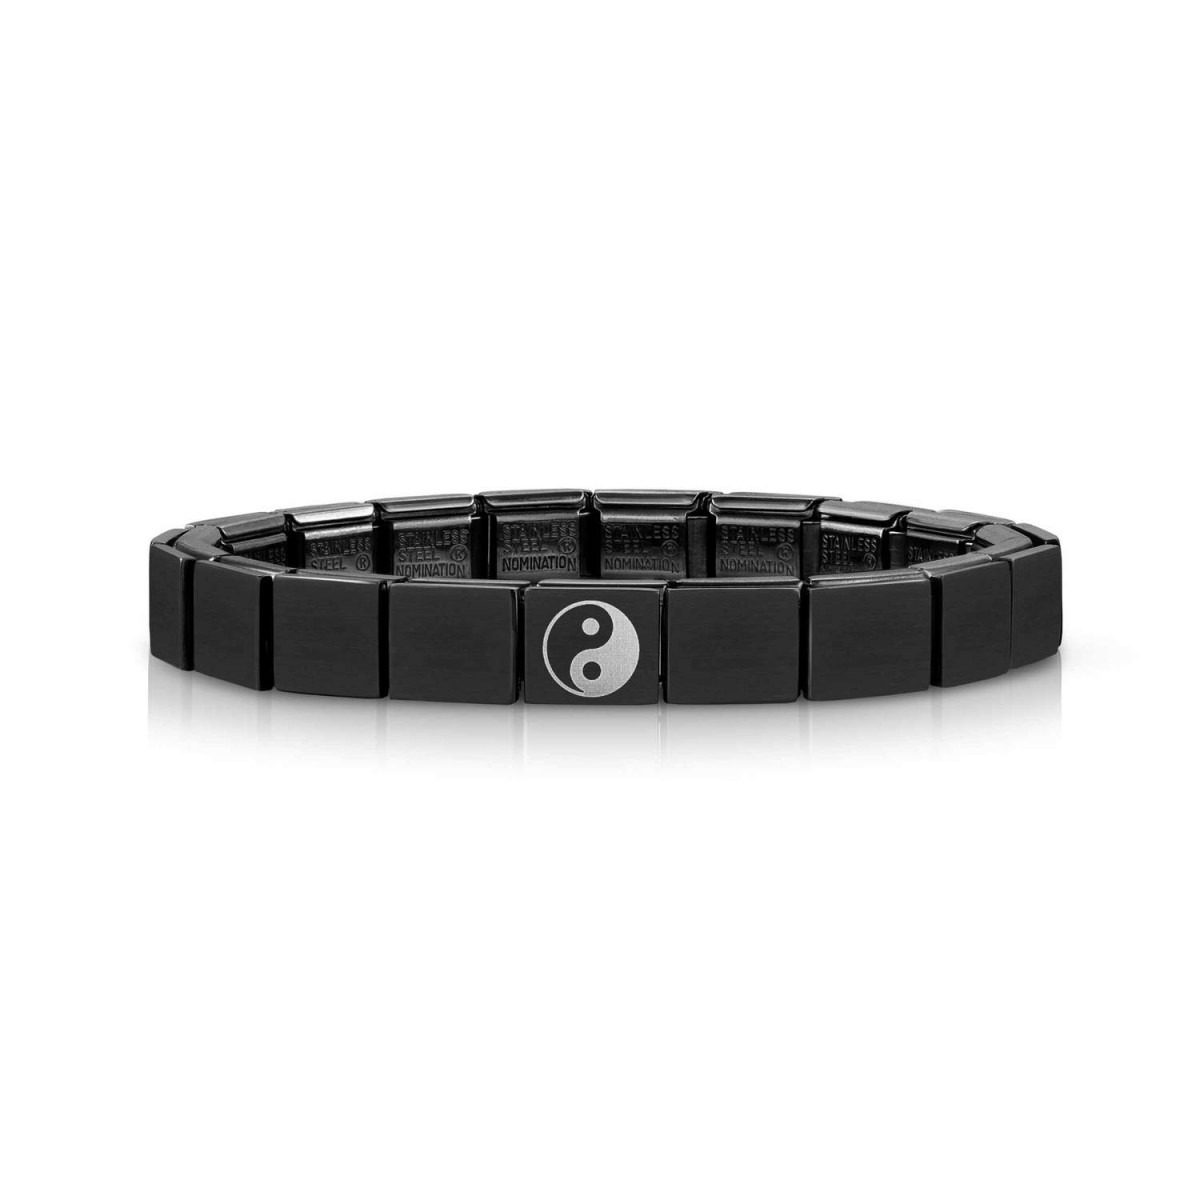 Yin Yang Best Friend Bracelets for 2 Matching Adjustable Cord Bracelet -  Walmart.com